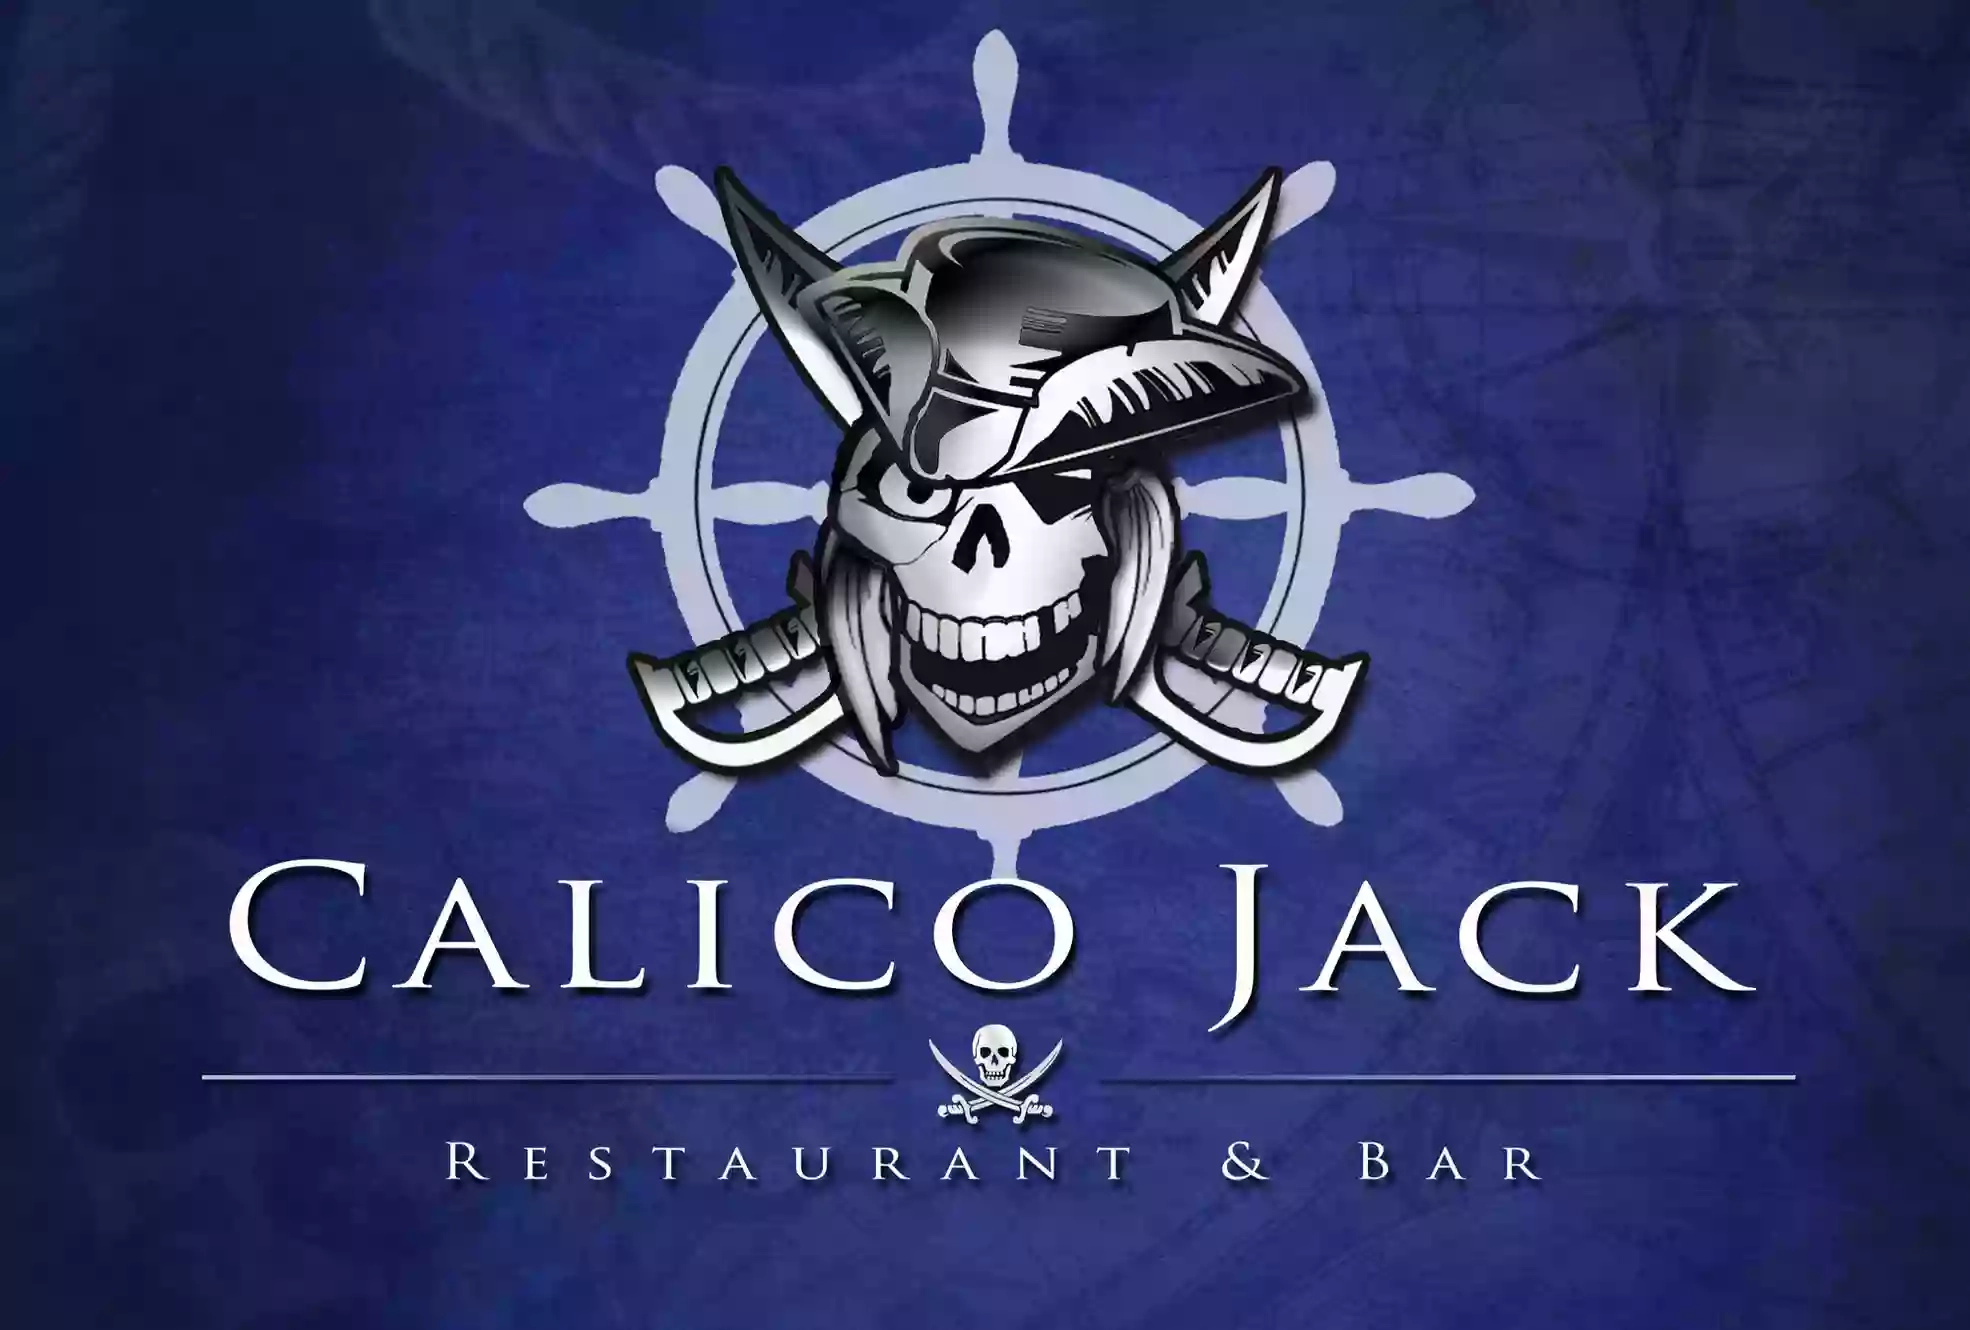 Calico Jack Restaurant & Bar